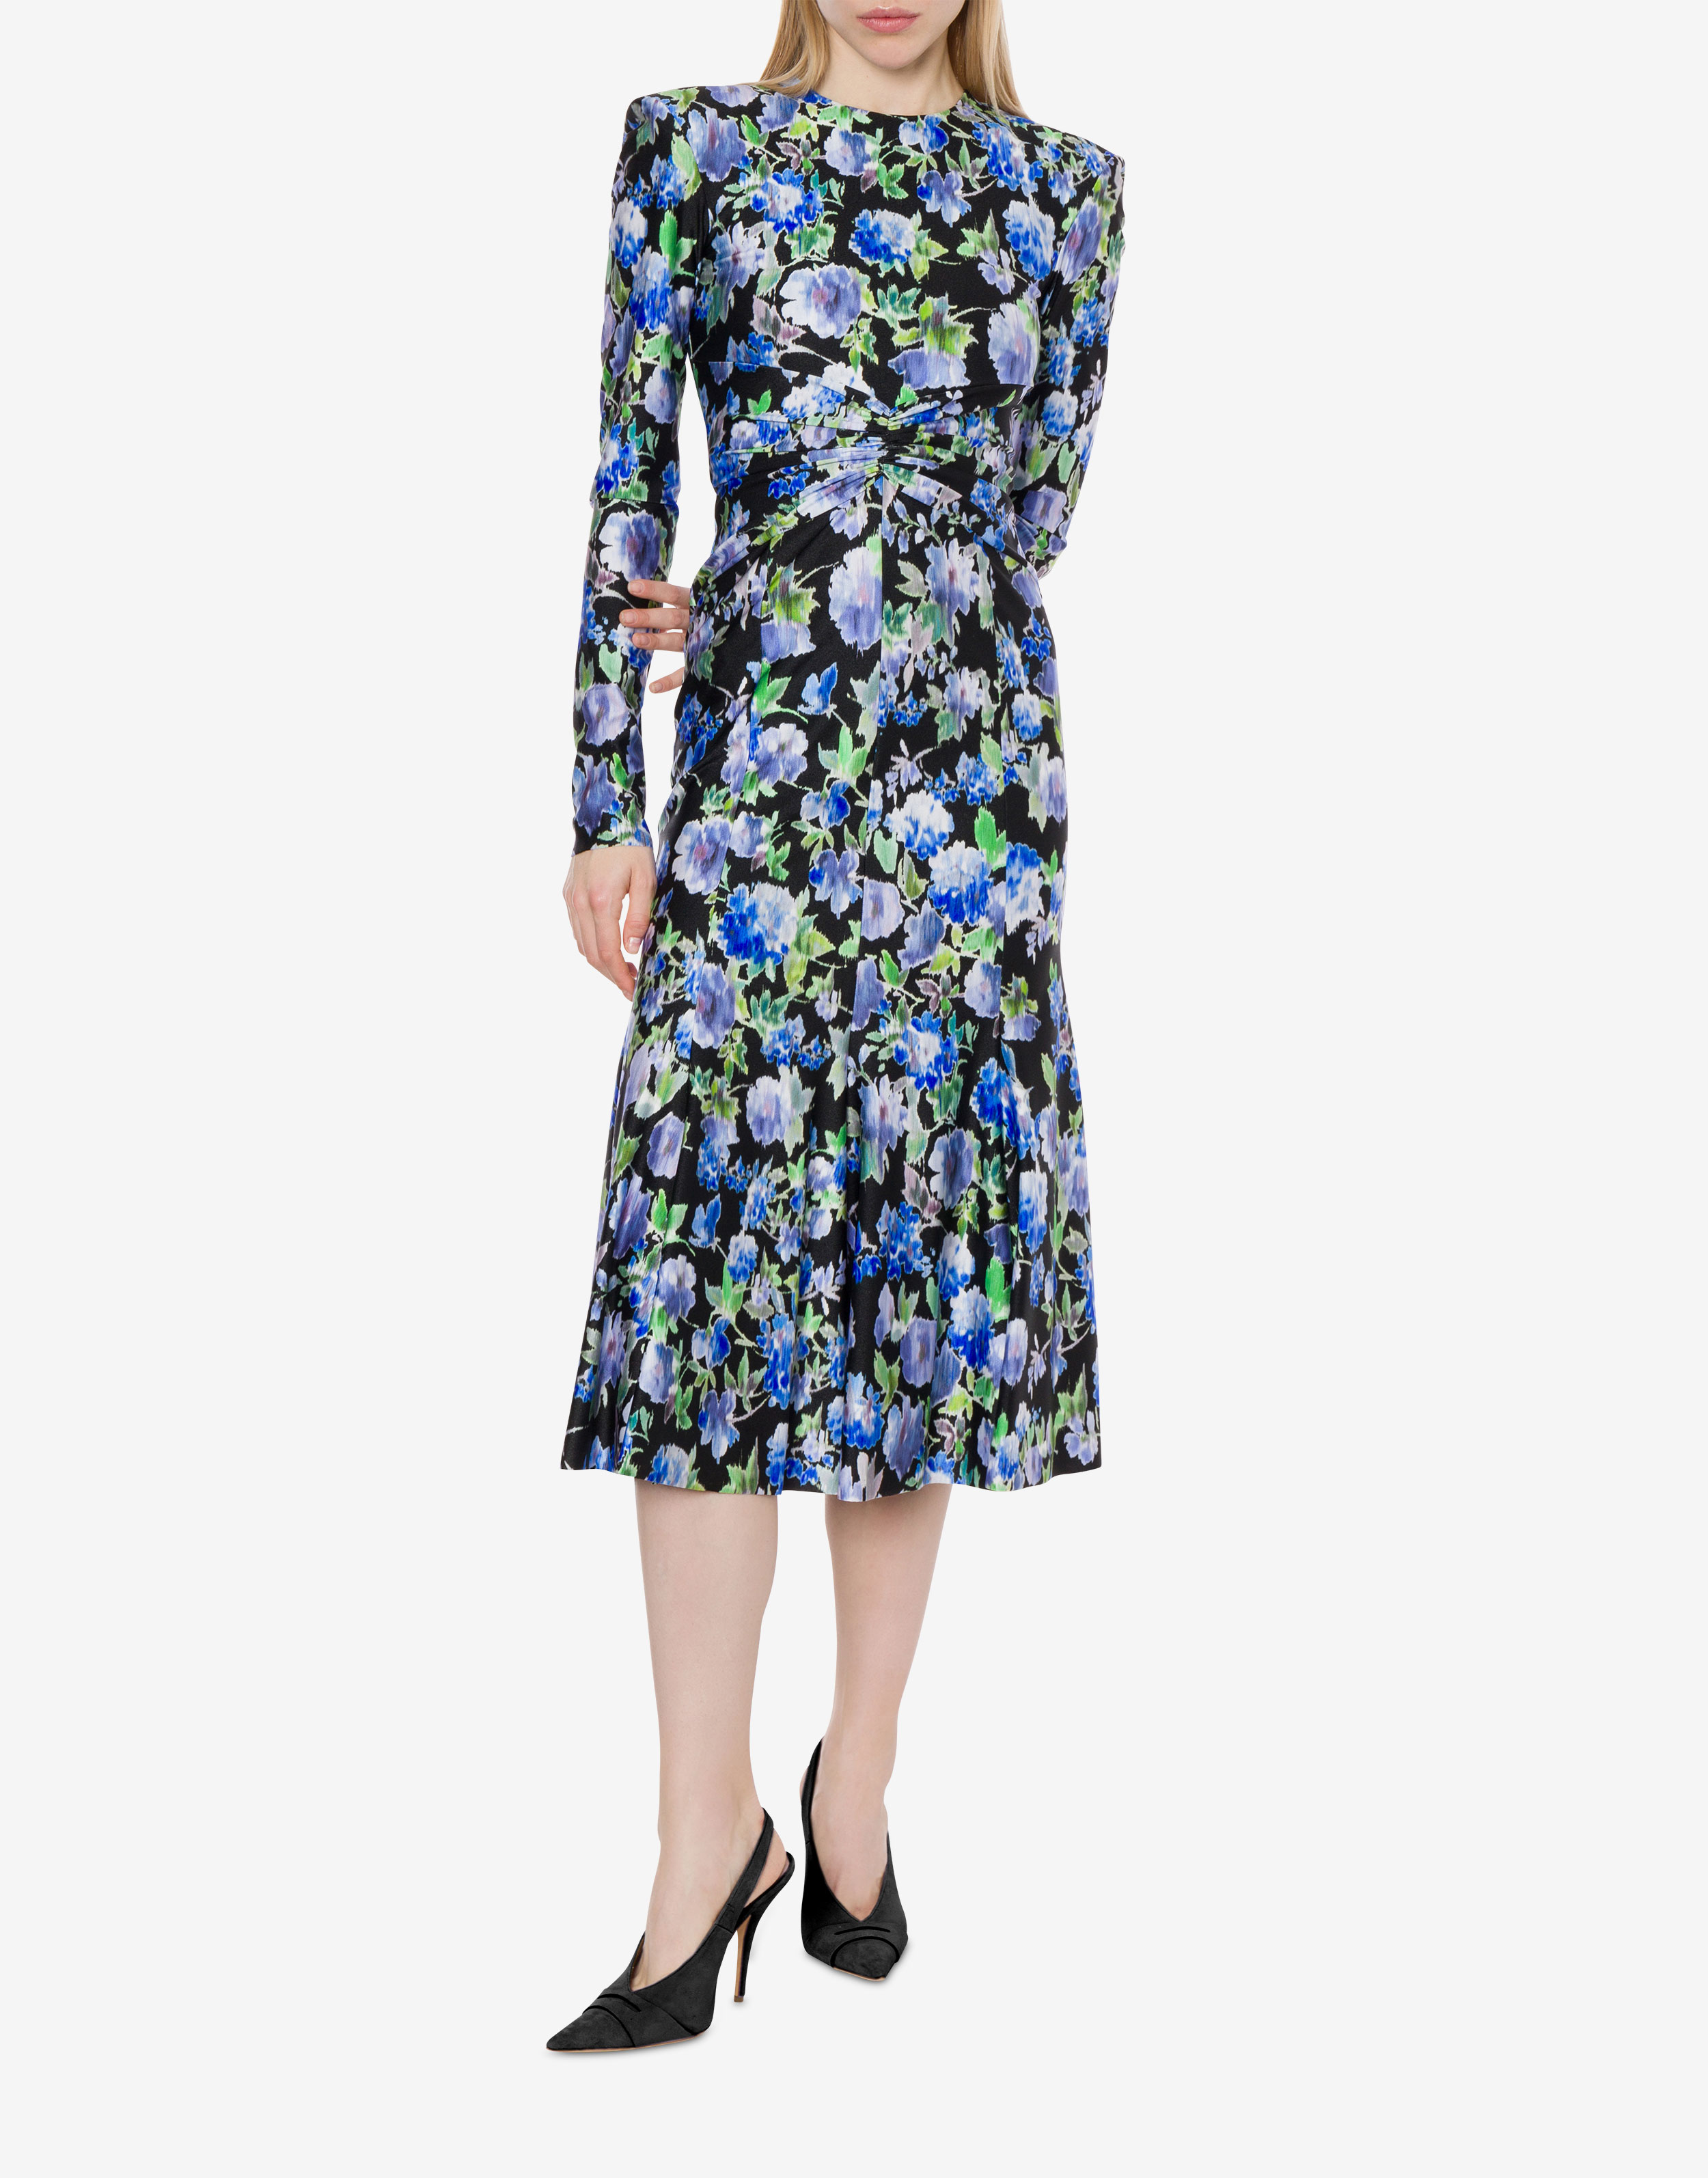 Longuette dress with floral print